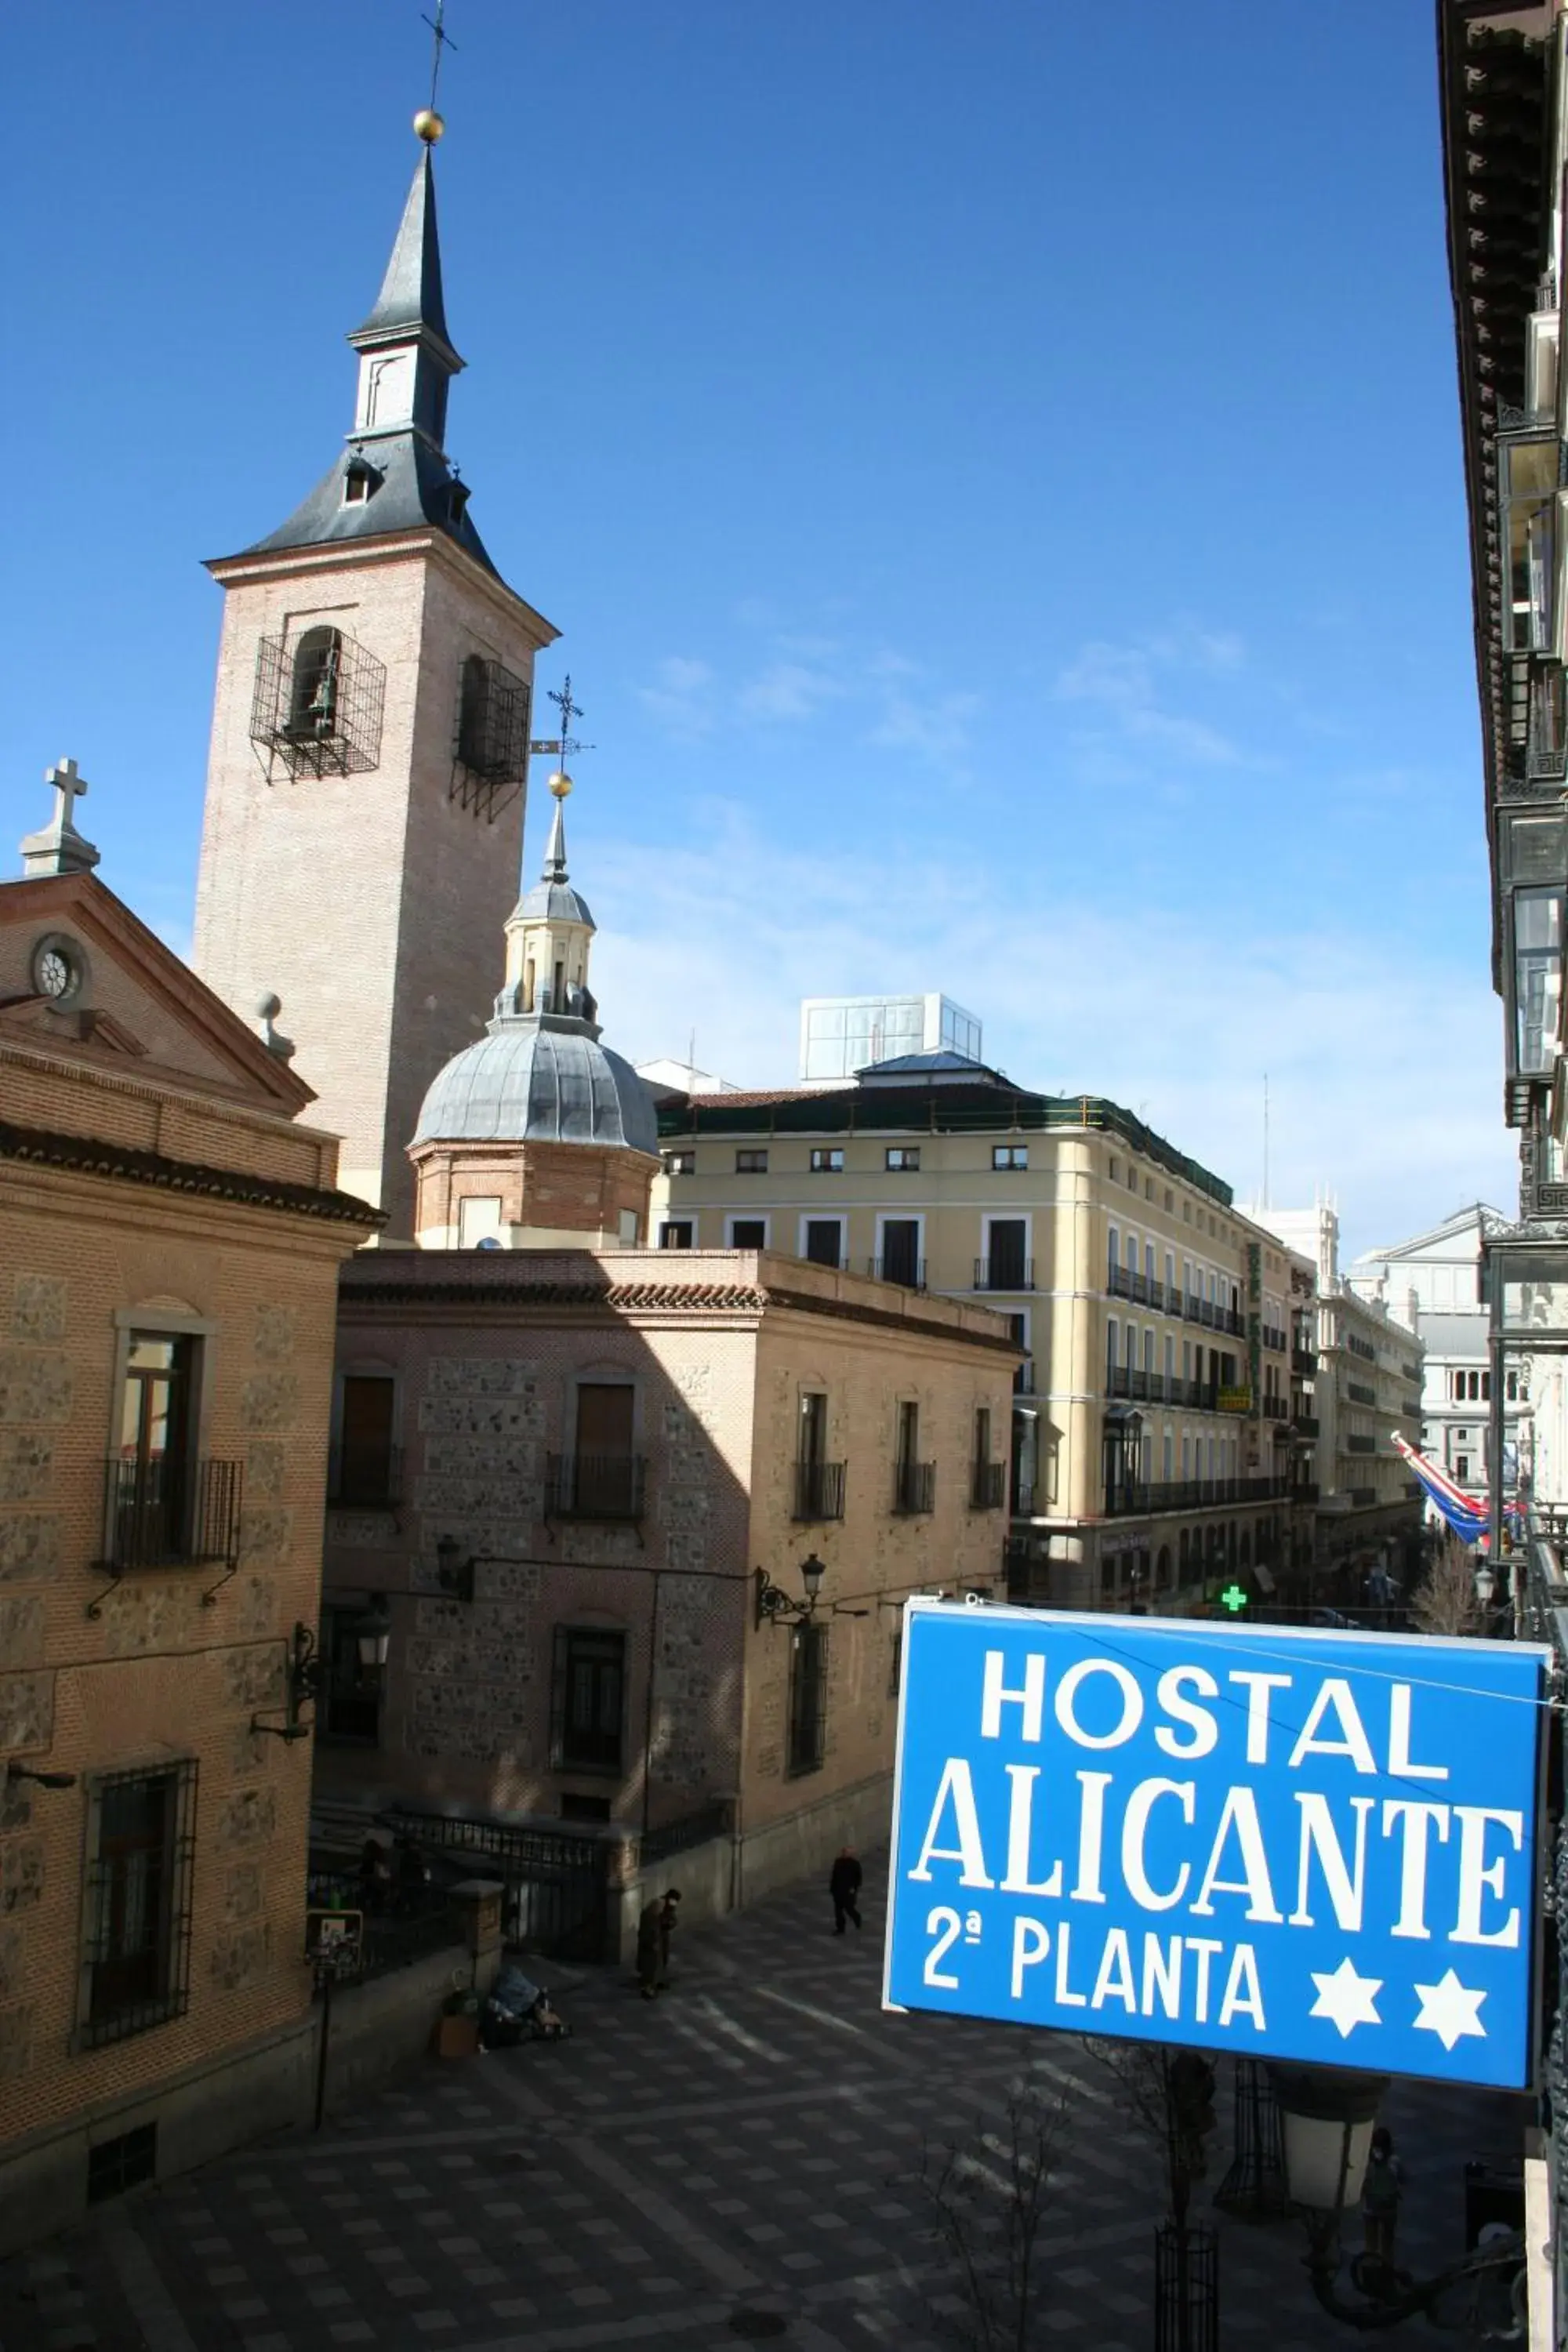 Landmark view in Hostal Alicante